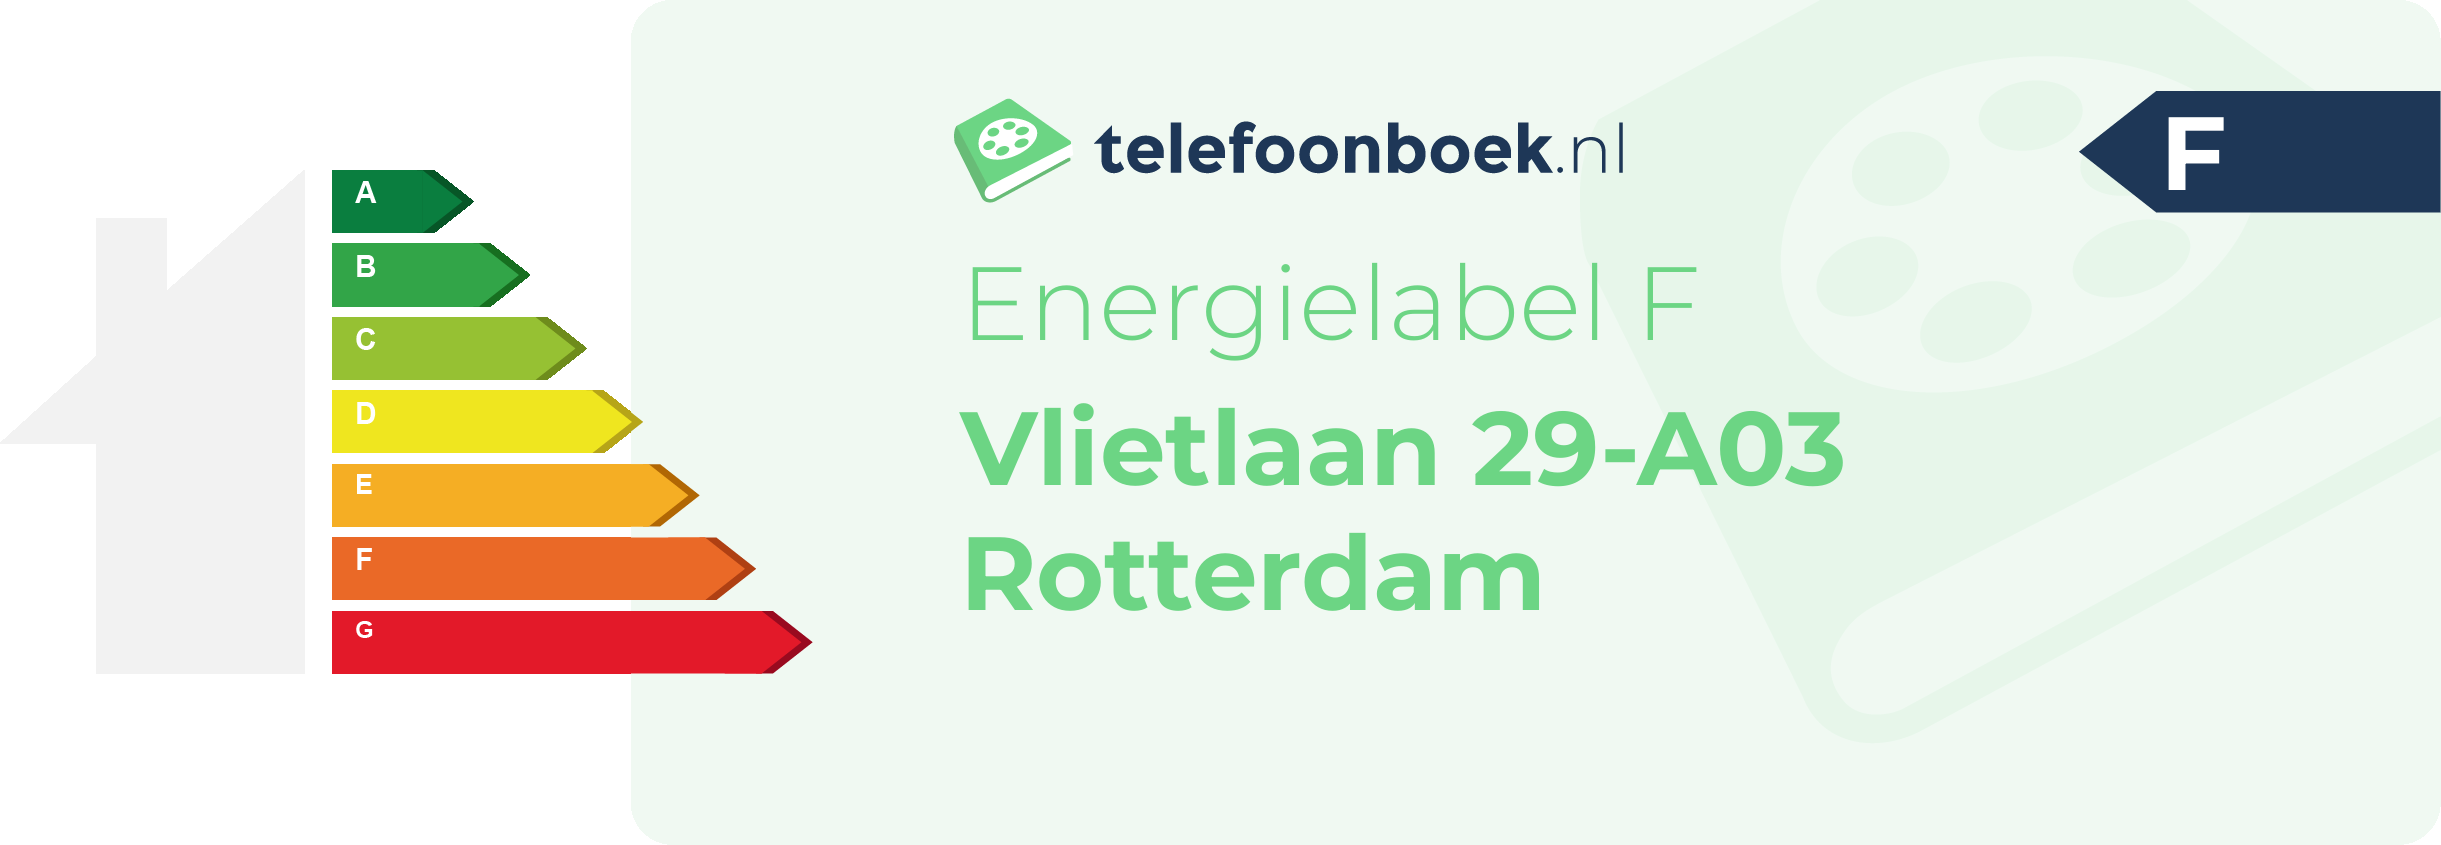 Energielabel Vlietlaan 29-A03 Rotterdam